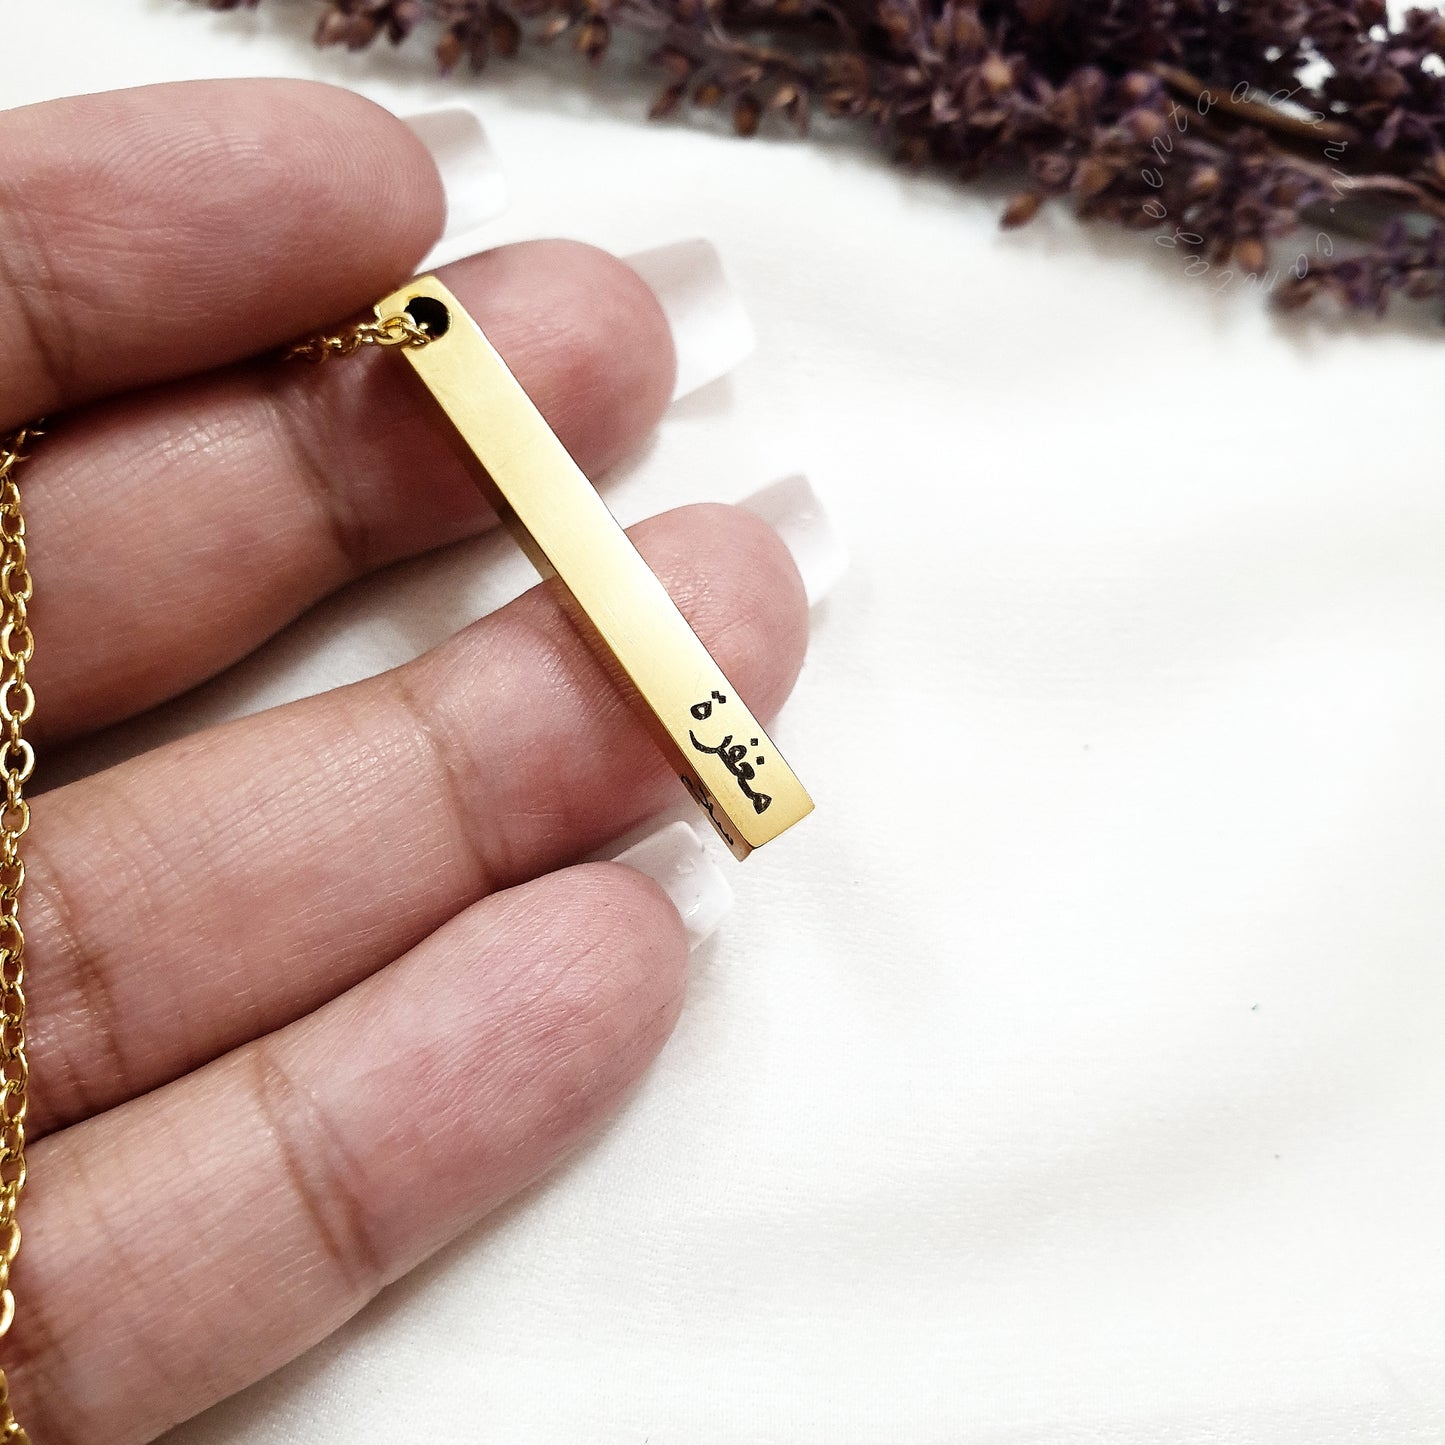 Inspiring Rectangle Bar Deen Pendant Necklace -  (Maghfirah) مغفرة, (Love) حب, (Peace) سلام -  Gold 18K Plated - Islamic Gift